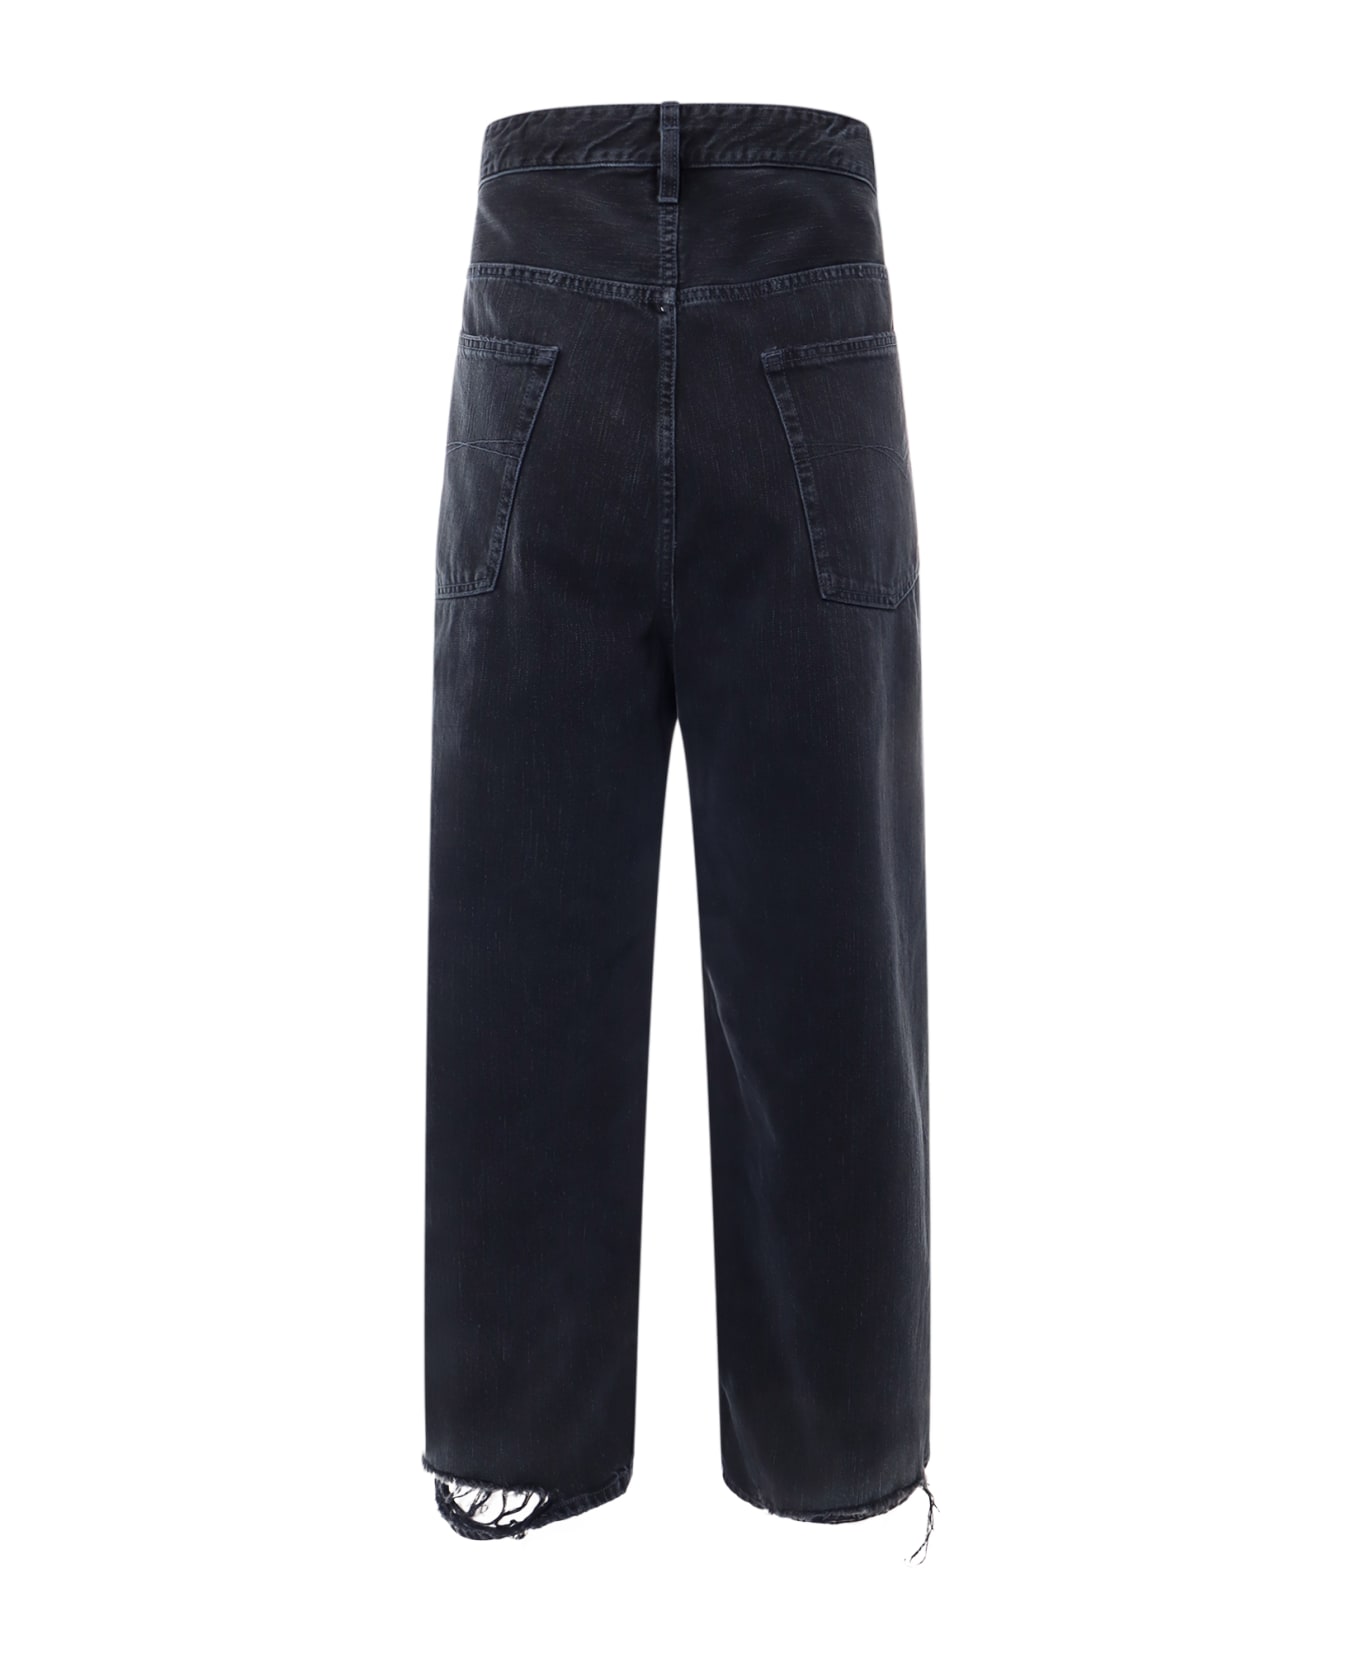 Balenciaga Trouser - Blue/black